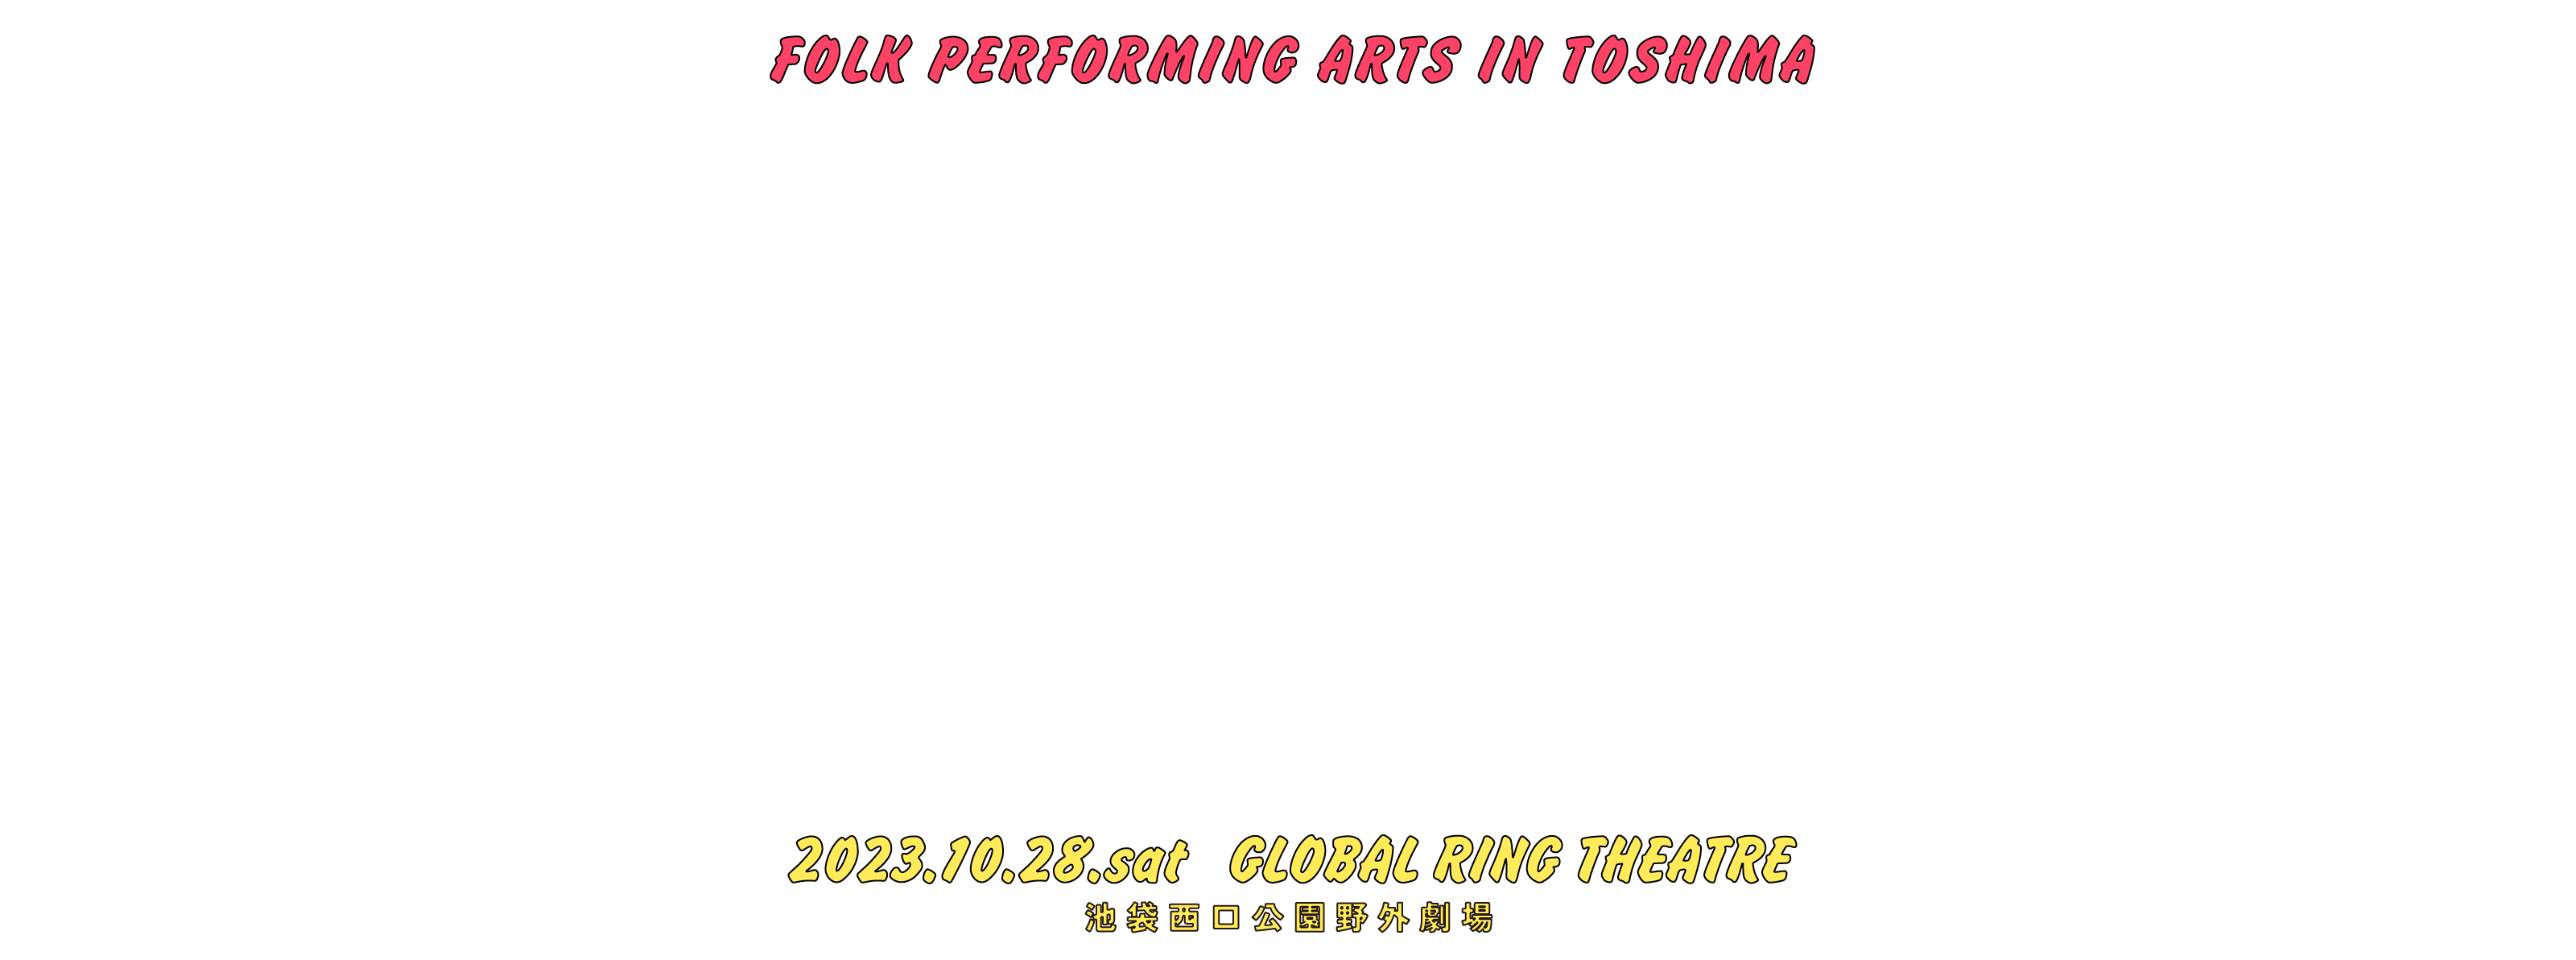 FOLK PERFORMING ARTS IN TOSHIMA 2023.10.28.sat GLOBAL RING THEATRE 池袋西口公園野外劇場